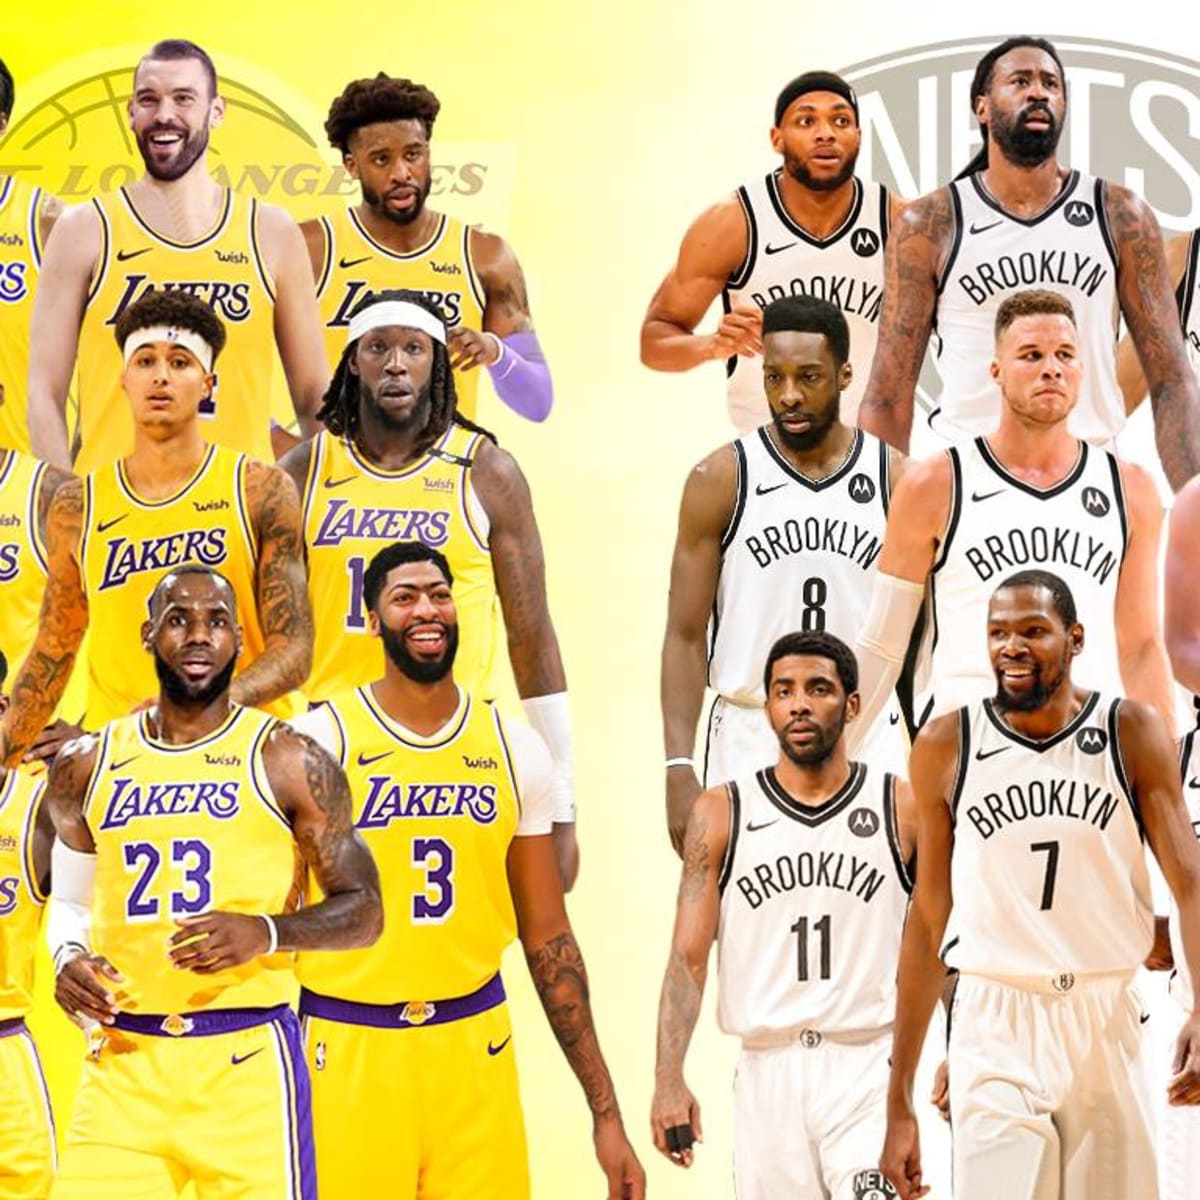 Can the LA Lakers' 120m dollar Big Three overcome the Brooklyn Nets?